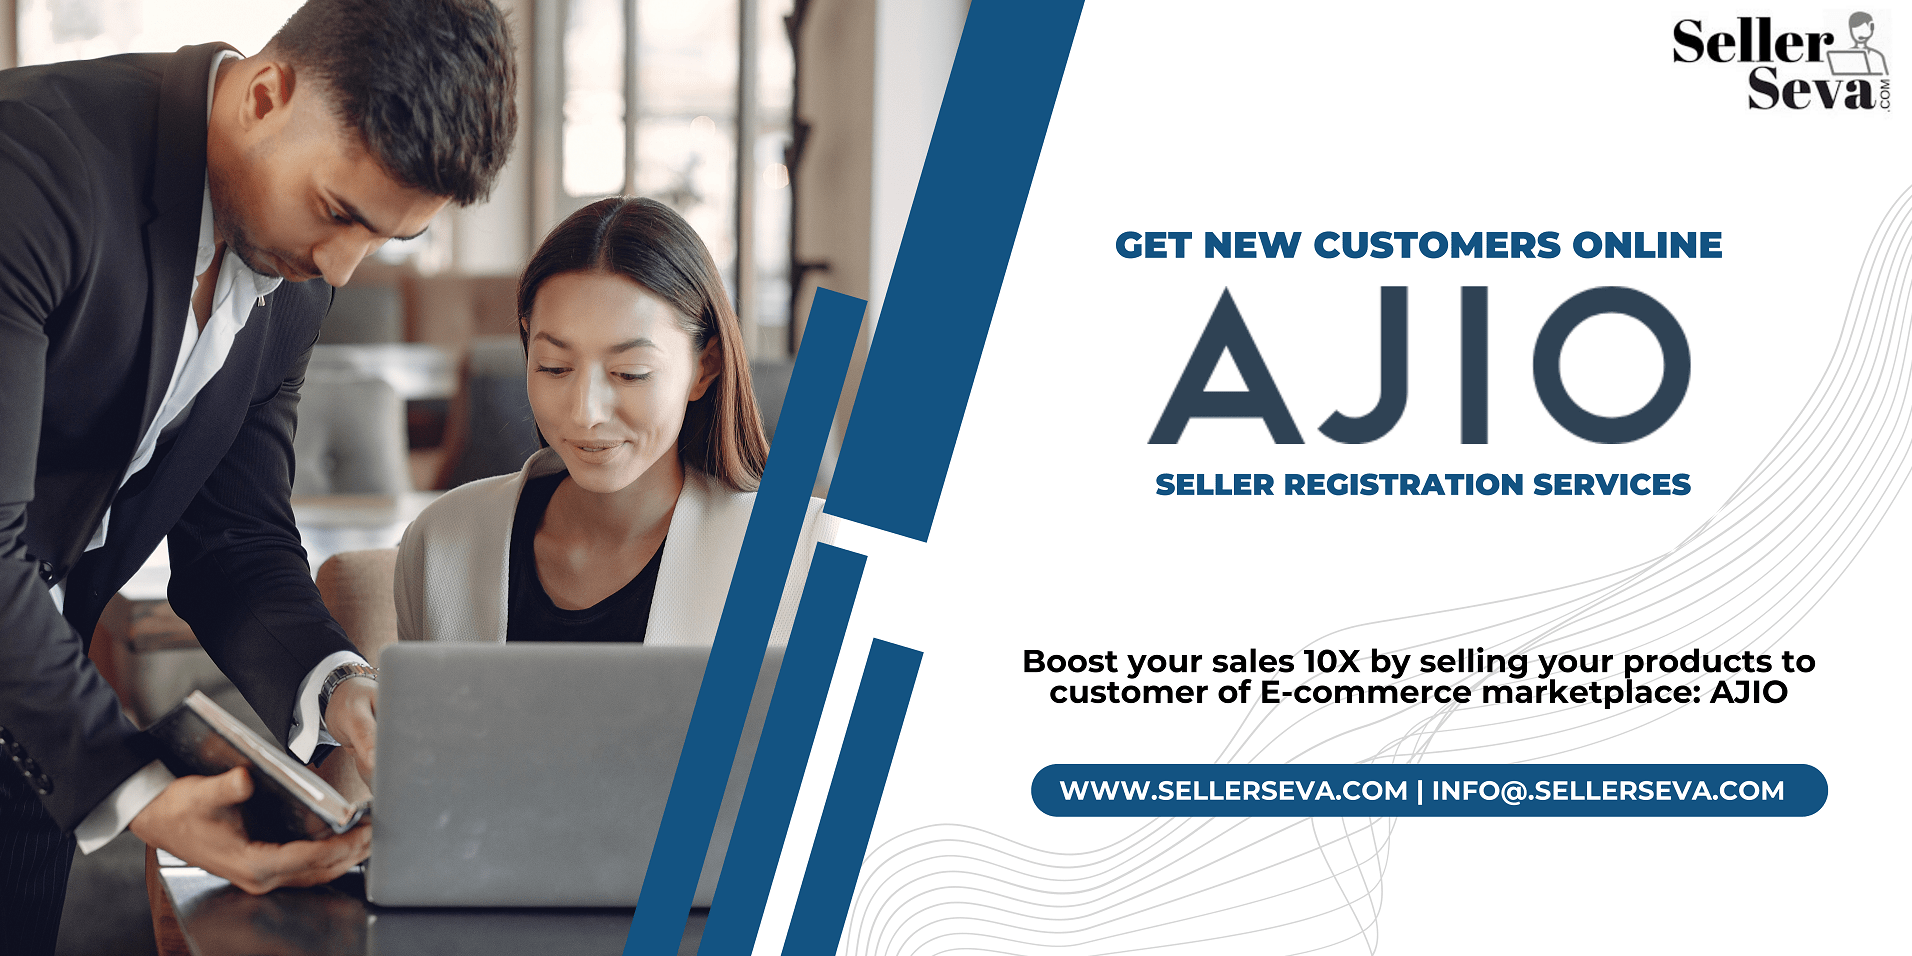 ajio seller registration services